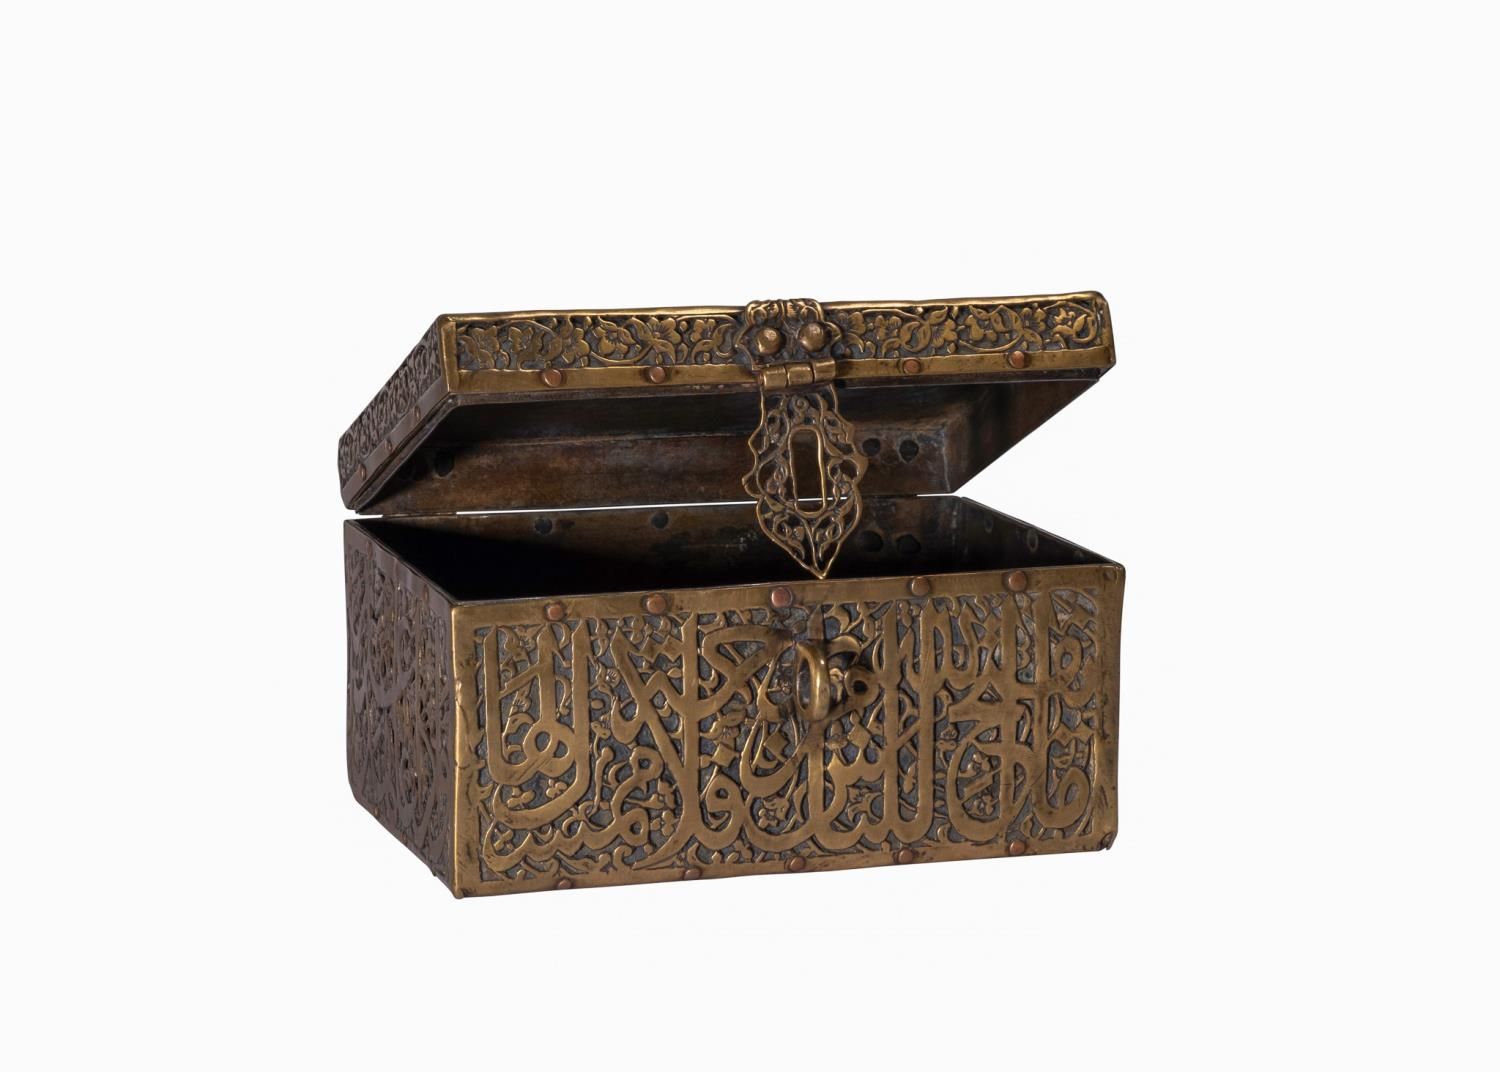 Null 一个波斯铜钢盒，19世纪
 
 方形，两侧覆盖着复杂的阿拉伯书法装饰，盒盖有铰链封口，宽15.5厘米，深11.5厘米
 ，高9.4厘米。